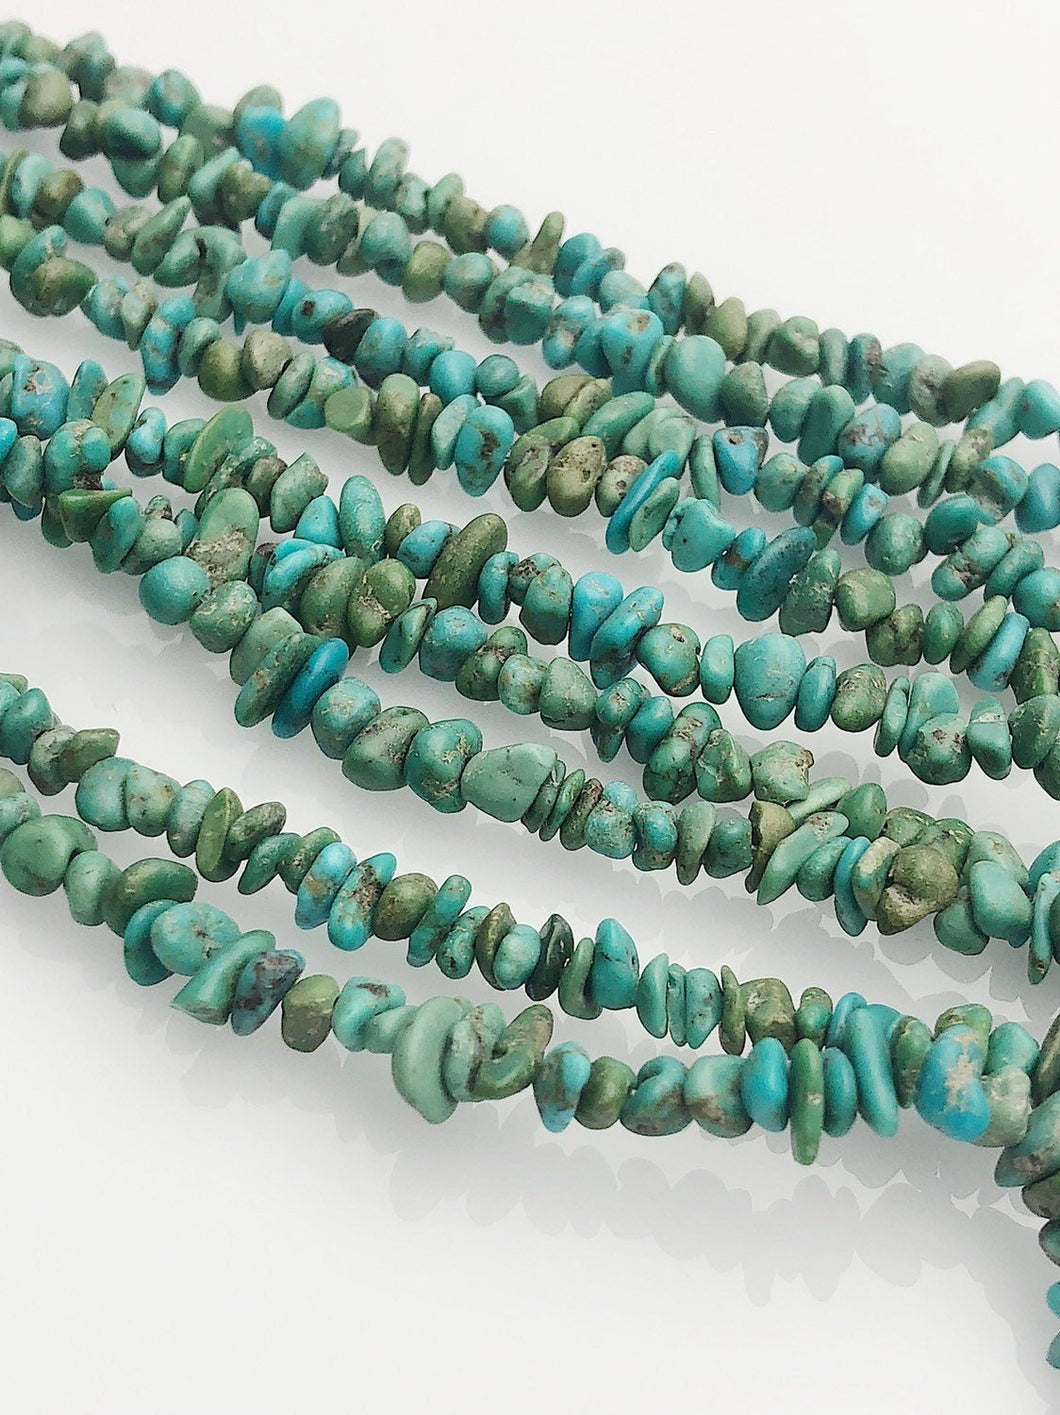 HALF OFF SALE - Turquoise Gemstone Beads, Full Strand, Semi Precious Gemstone, 16